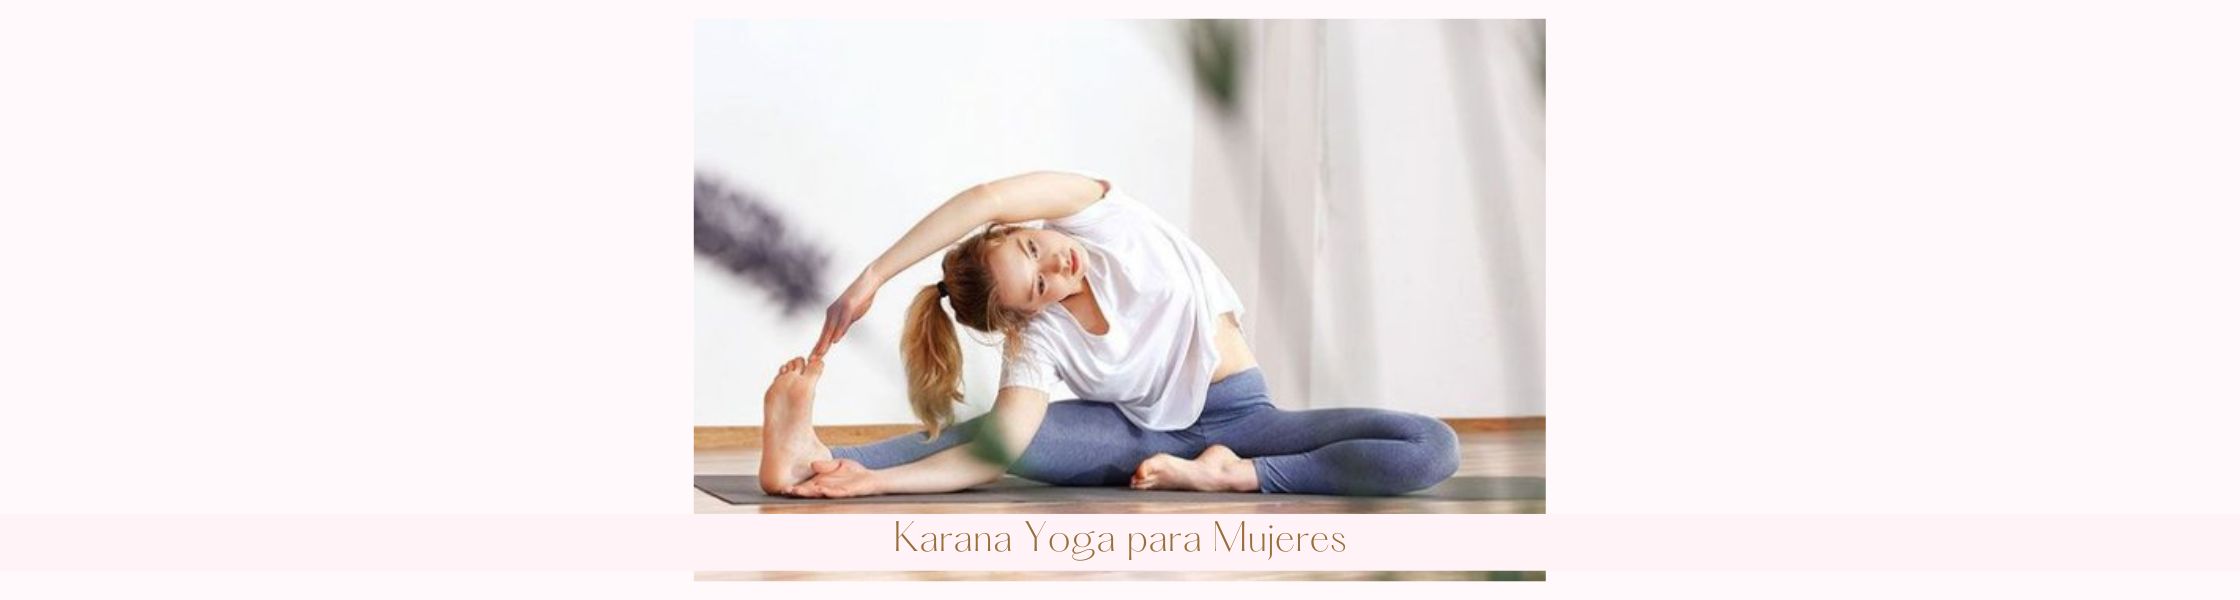 Karana Yoga para Mujeres